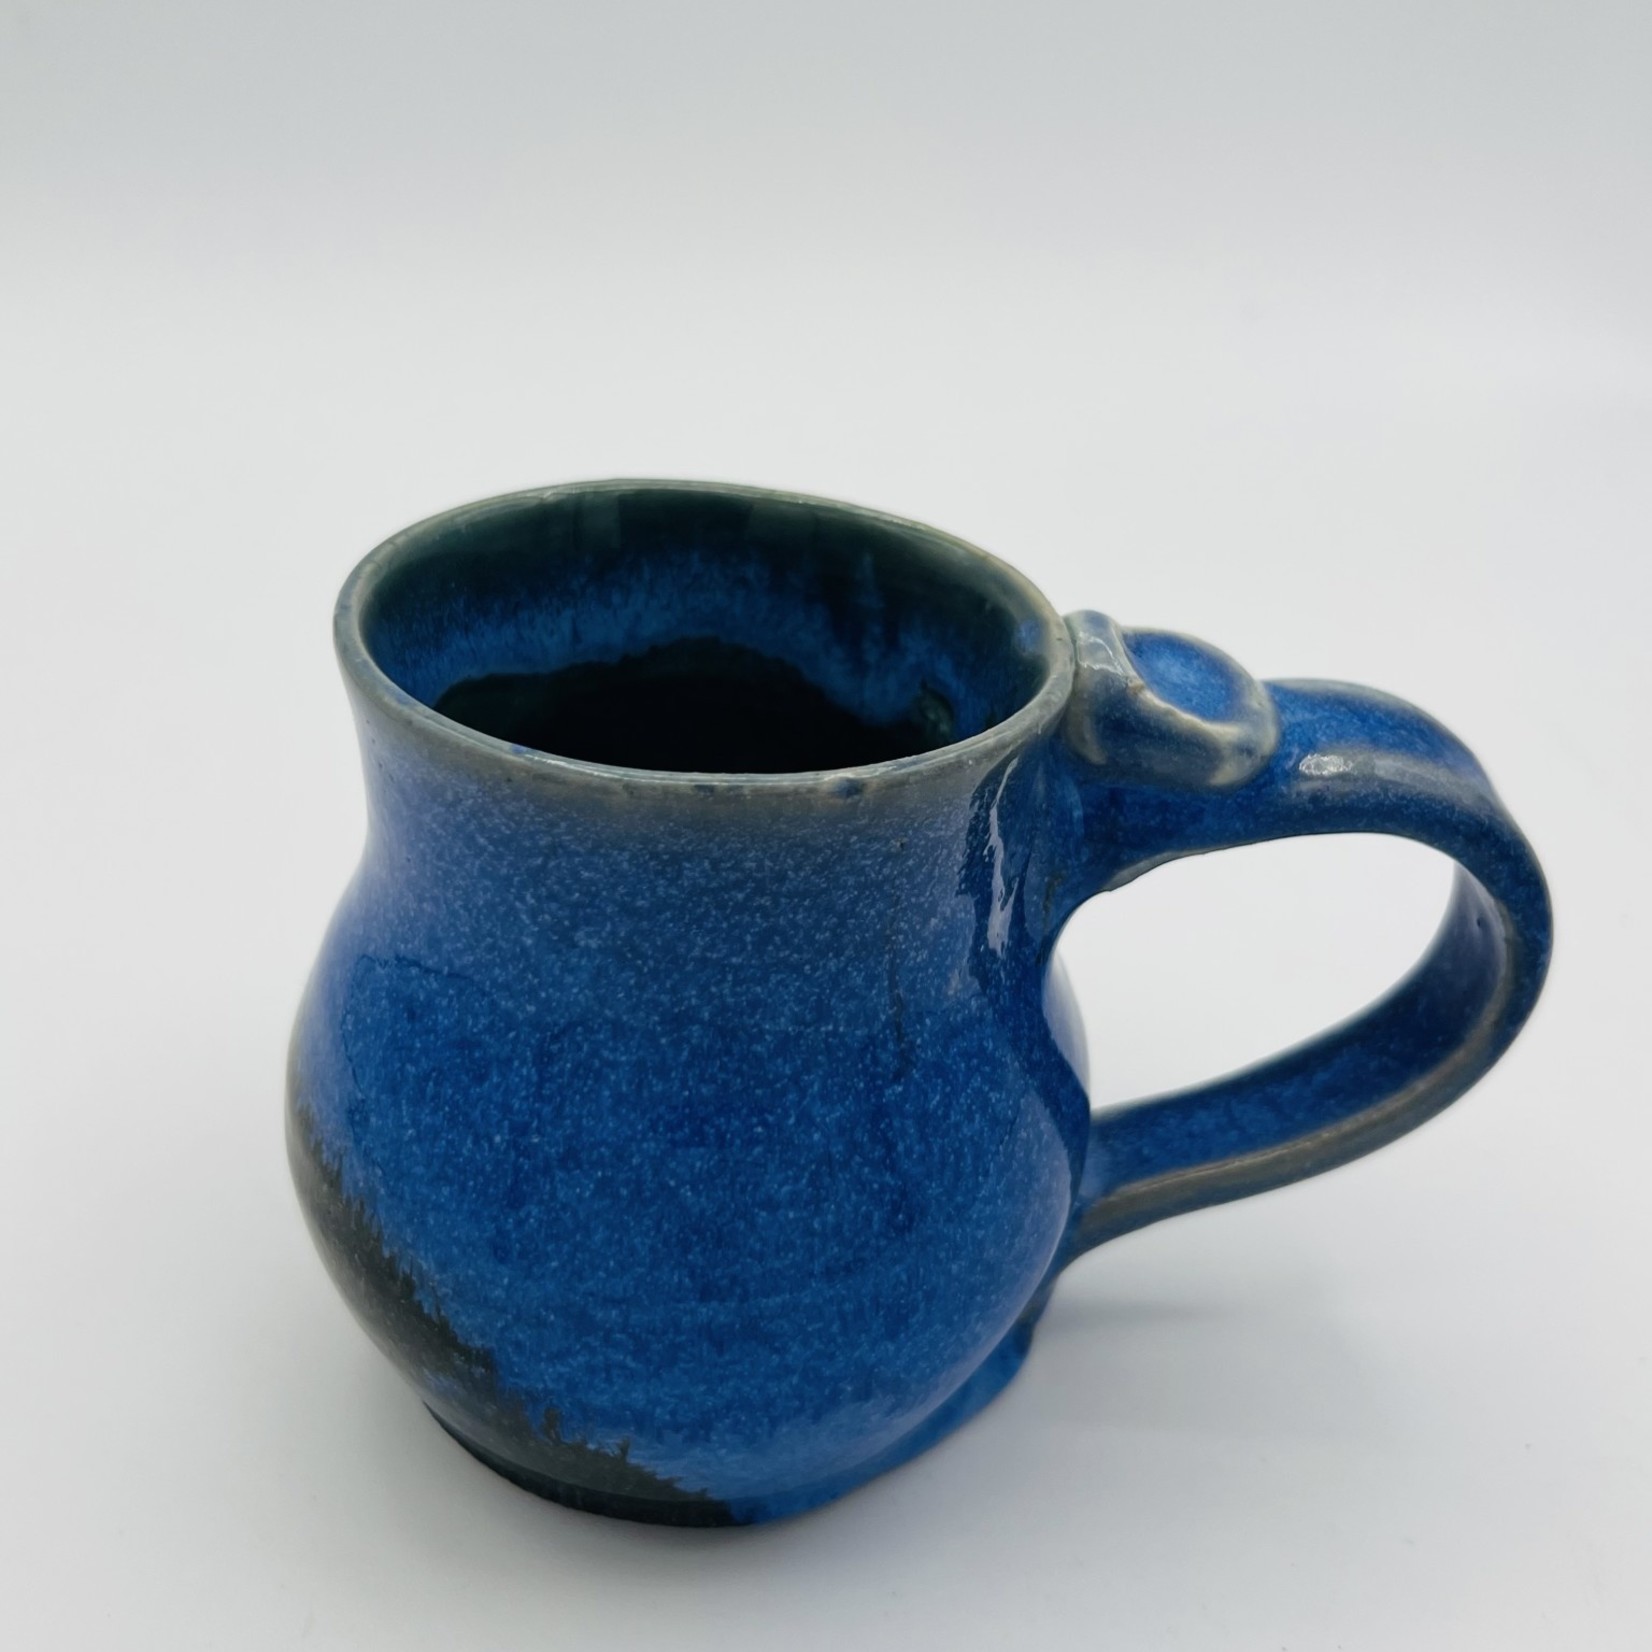 Clay in Mind Mug - Rustic Blue Black